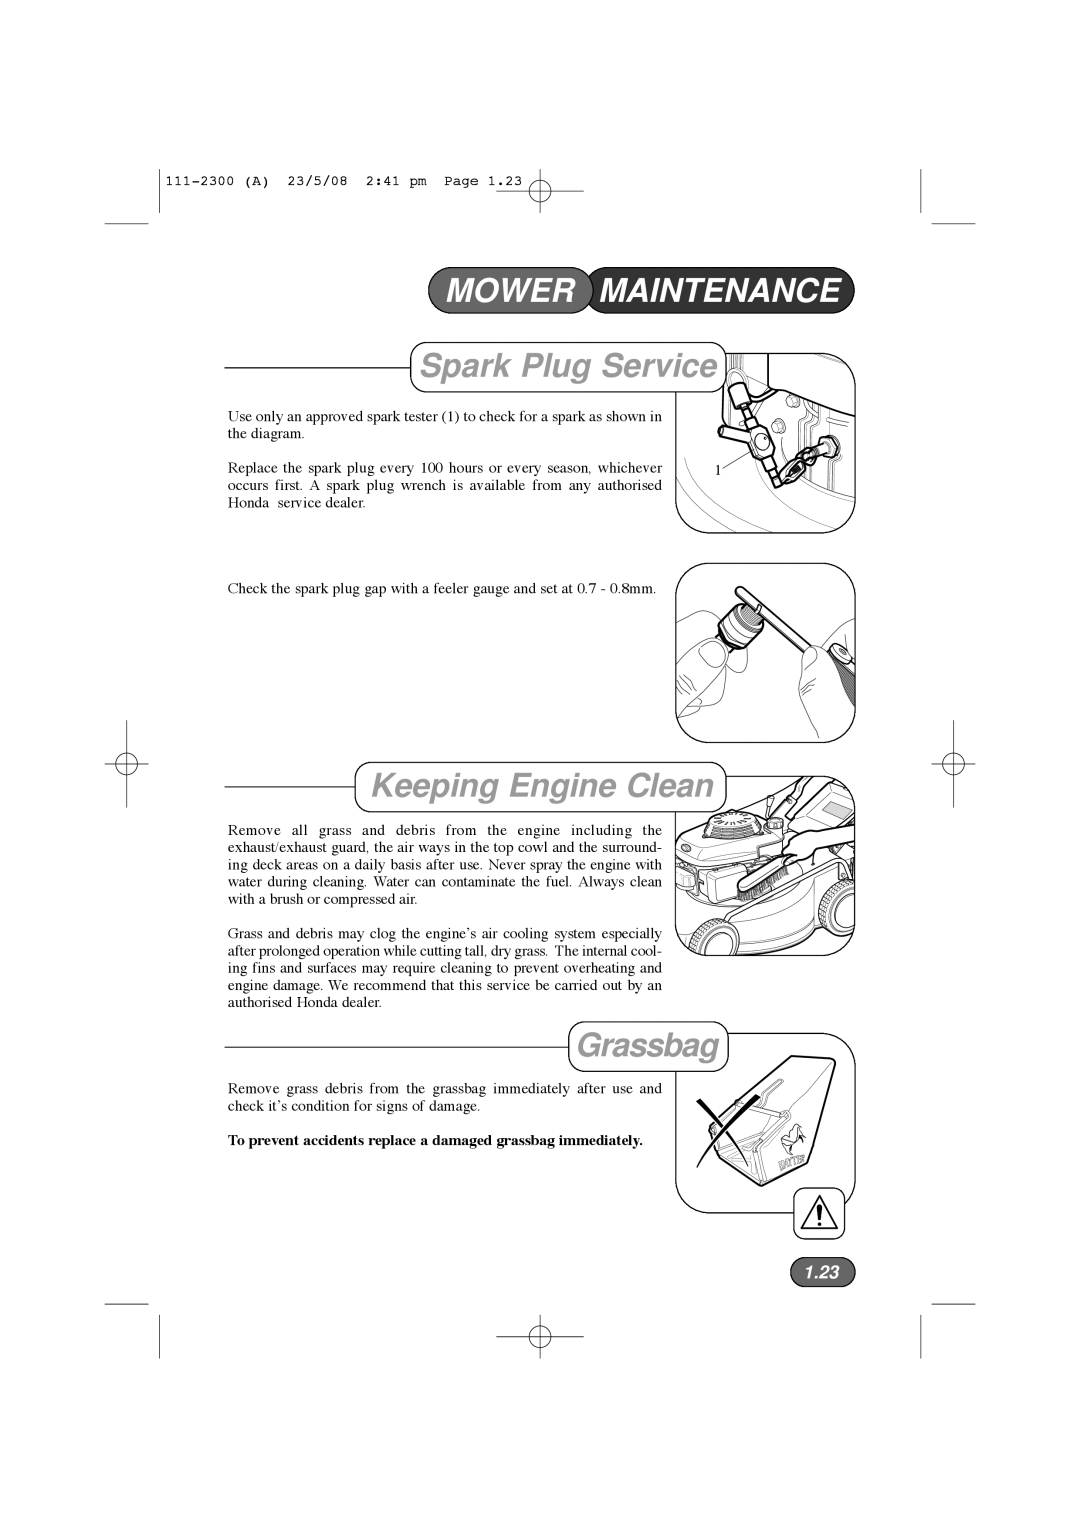 Hayter Mowers 432F, 434F, 435F, 433F manual Spark Plug Service, Keeping Engine Clean, 1.23, Mower Maintenance, Grassbag 